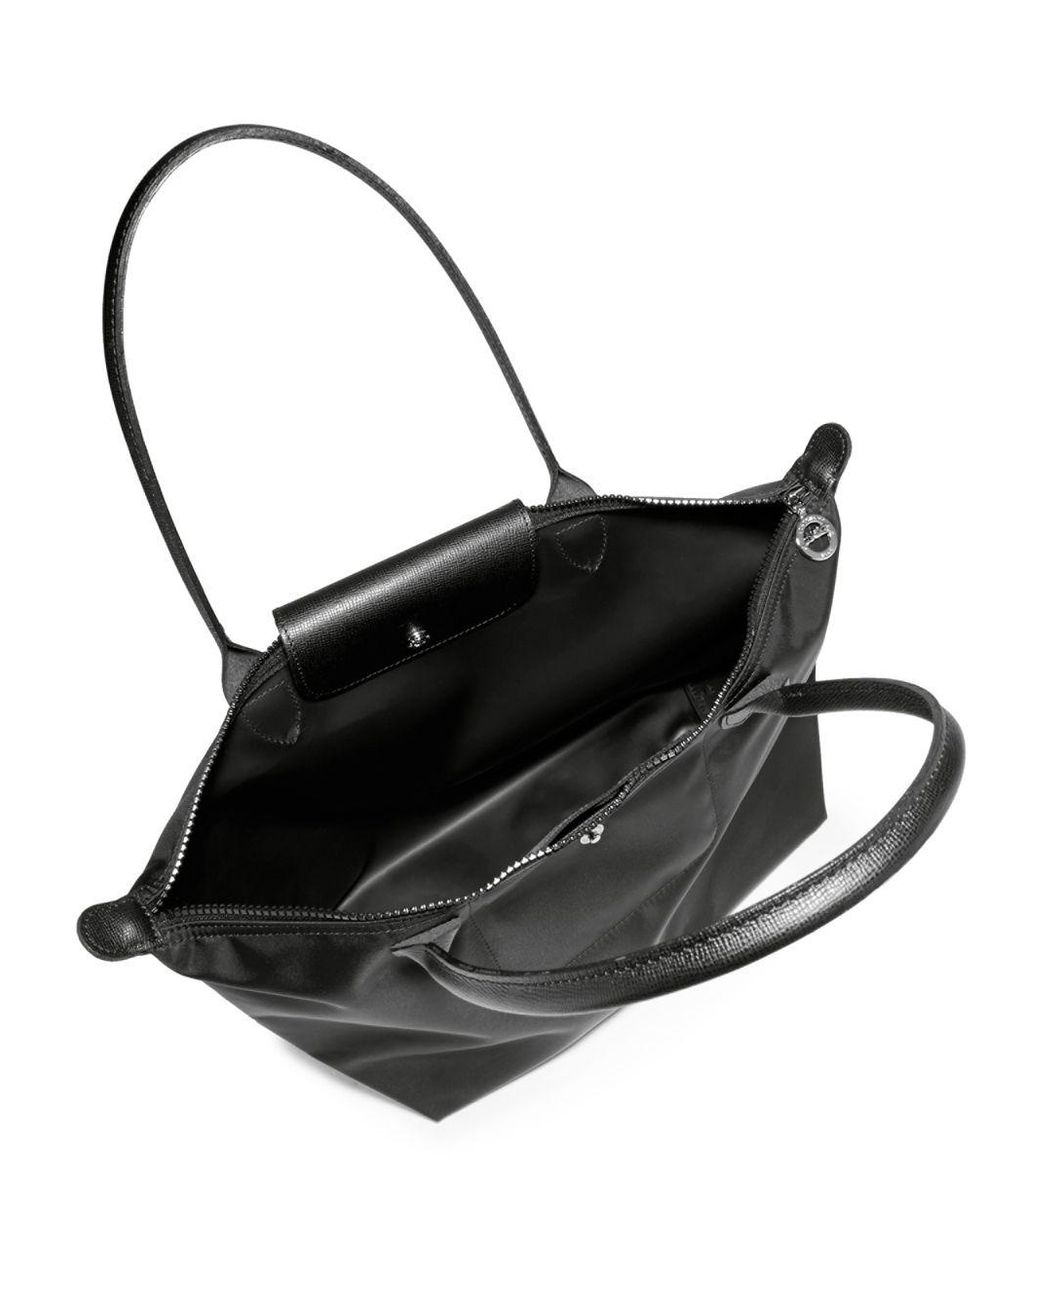 Longchamp, Bags, Longchamp Le Pliage Neo Large Nylon Tote Black